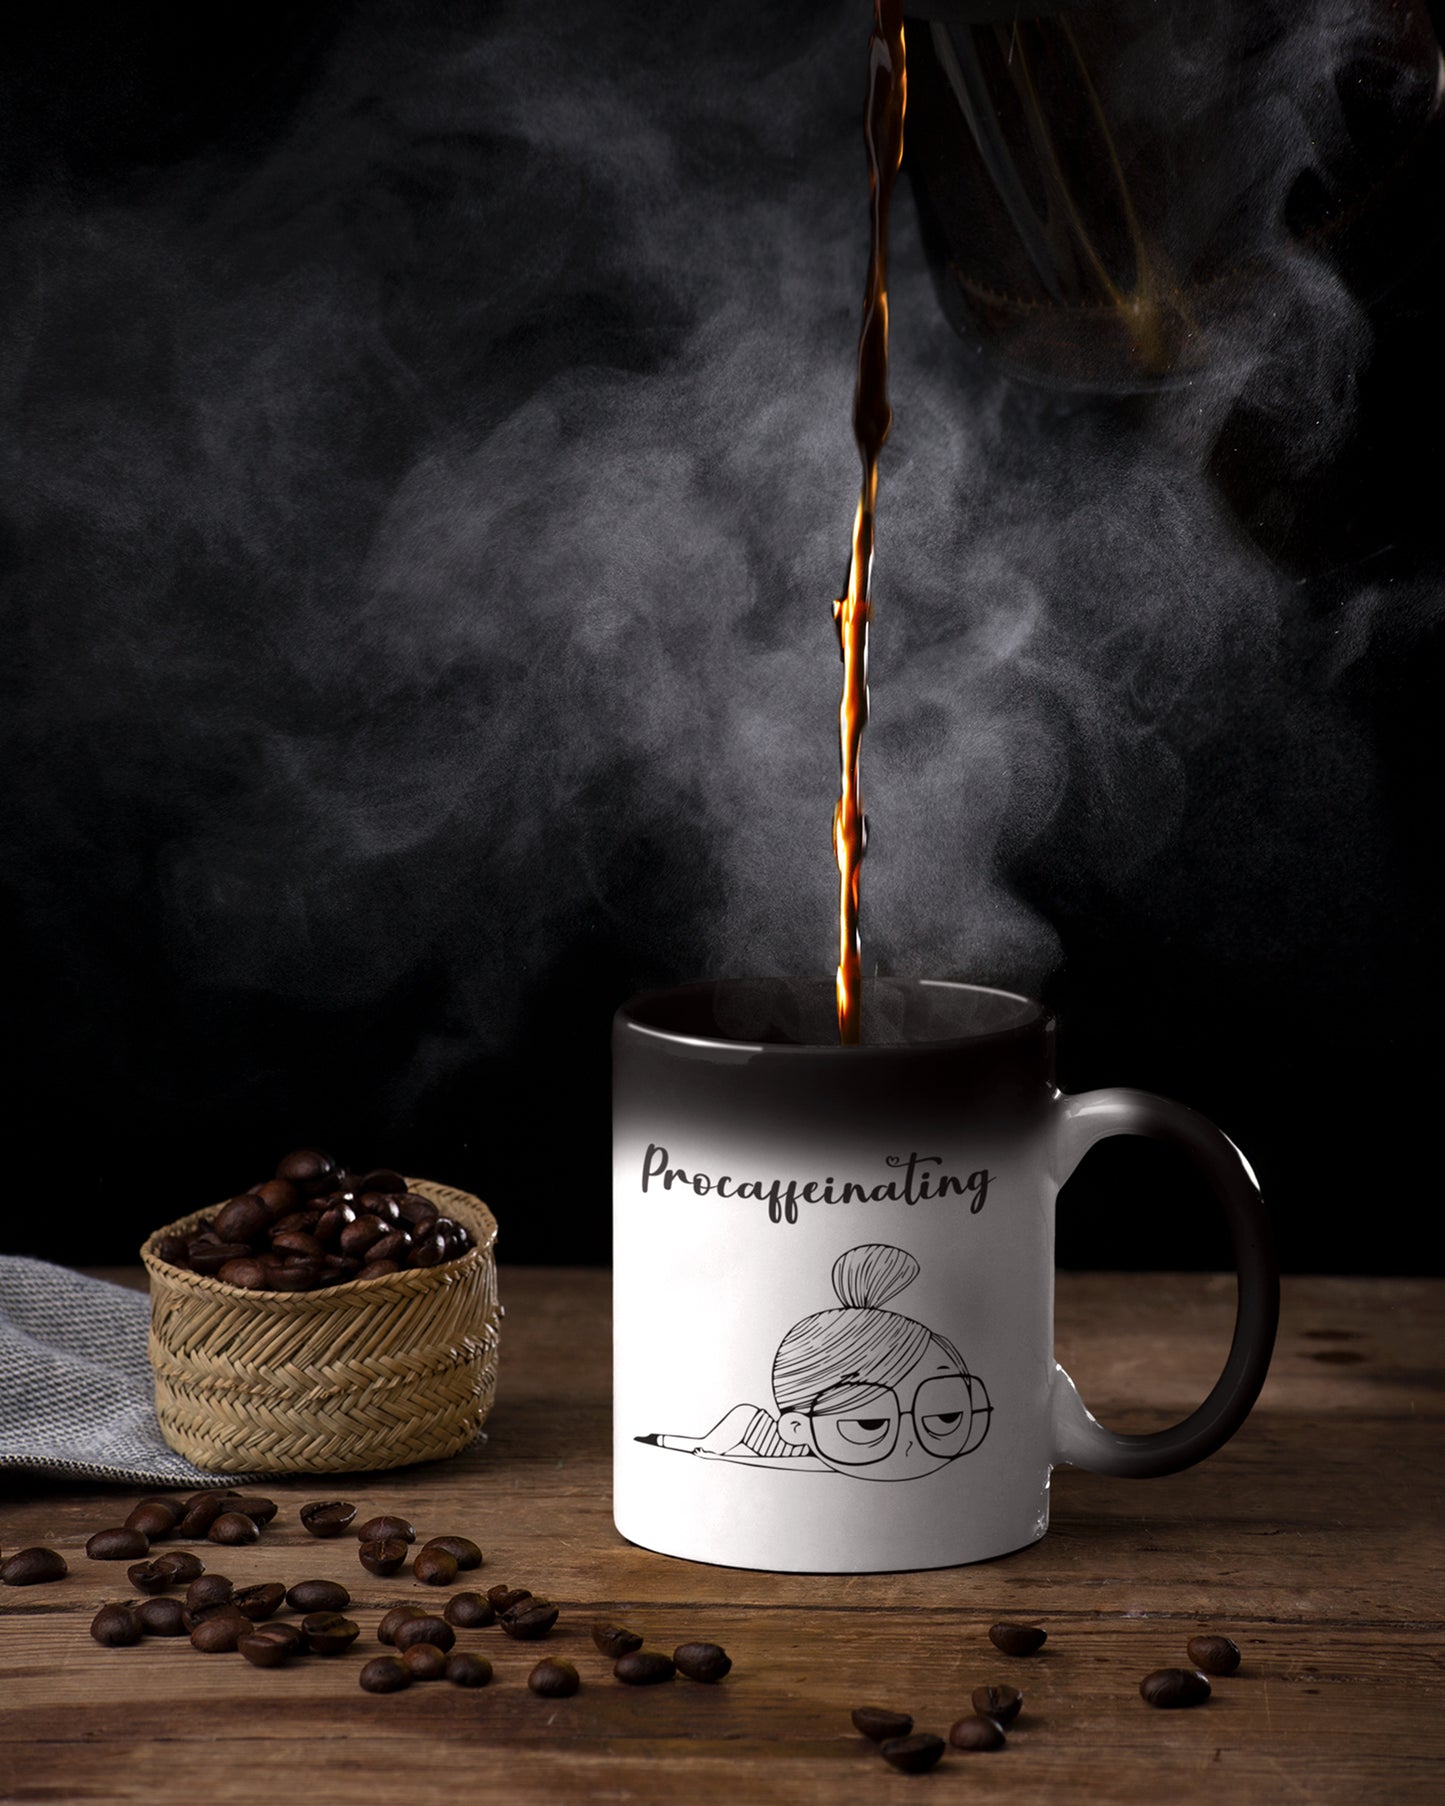 Procaffeinating printed magic coffee mugs for coffee lovers - Muselot